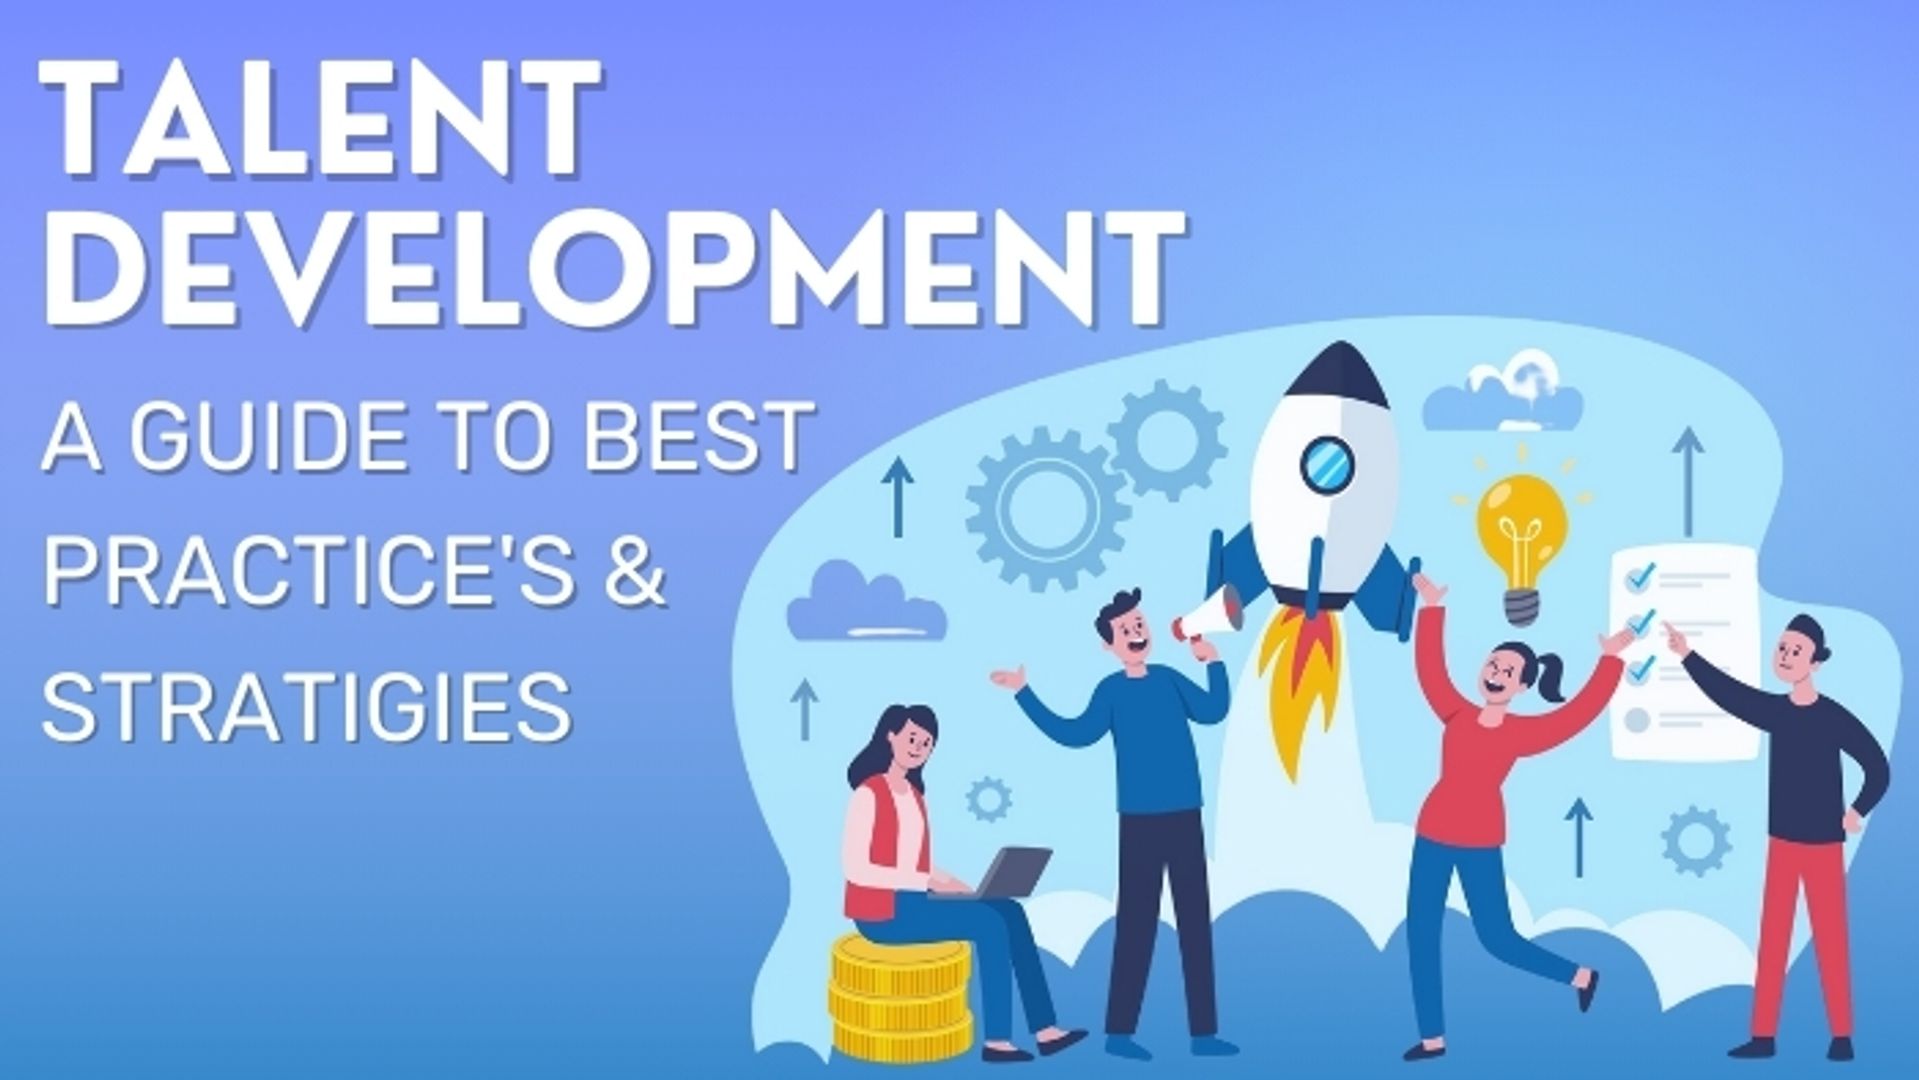 Talent development guide 